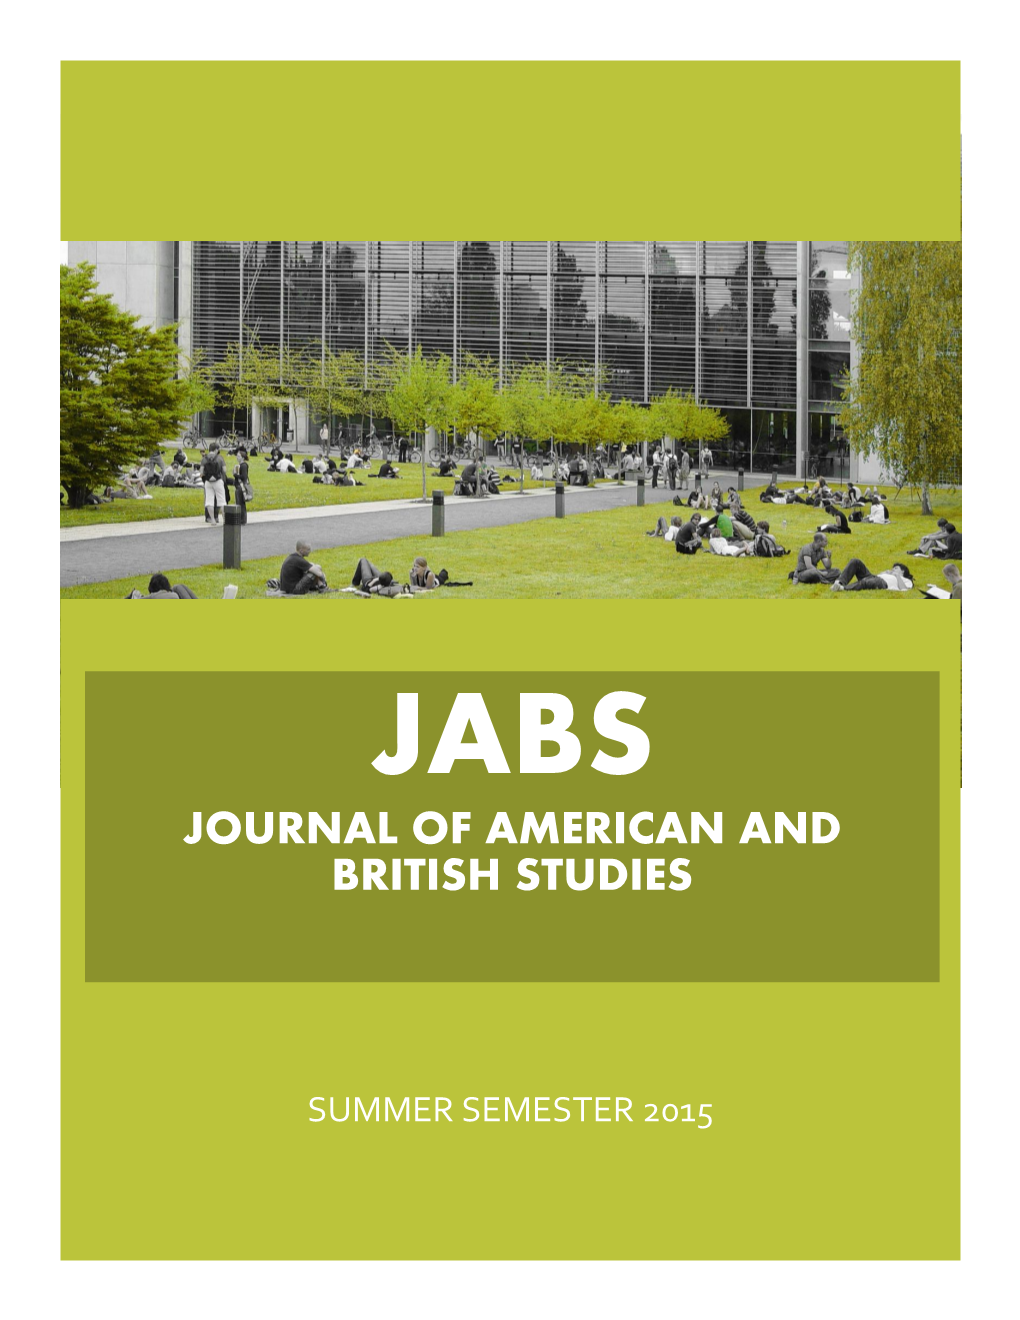 Journal of American and British Studies